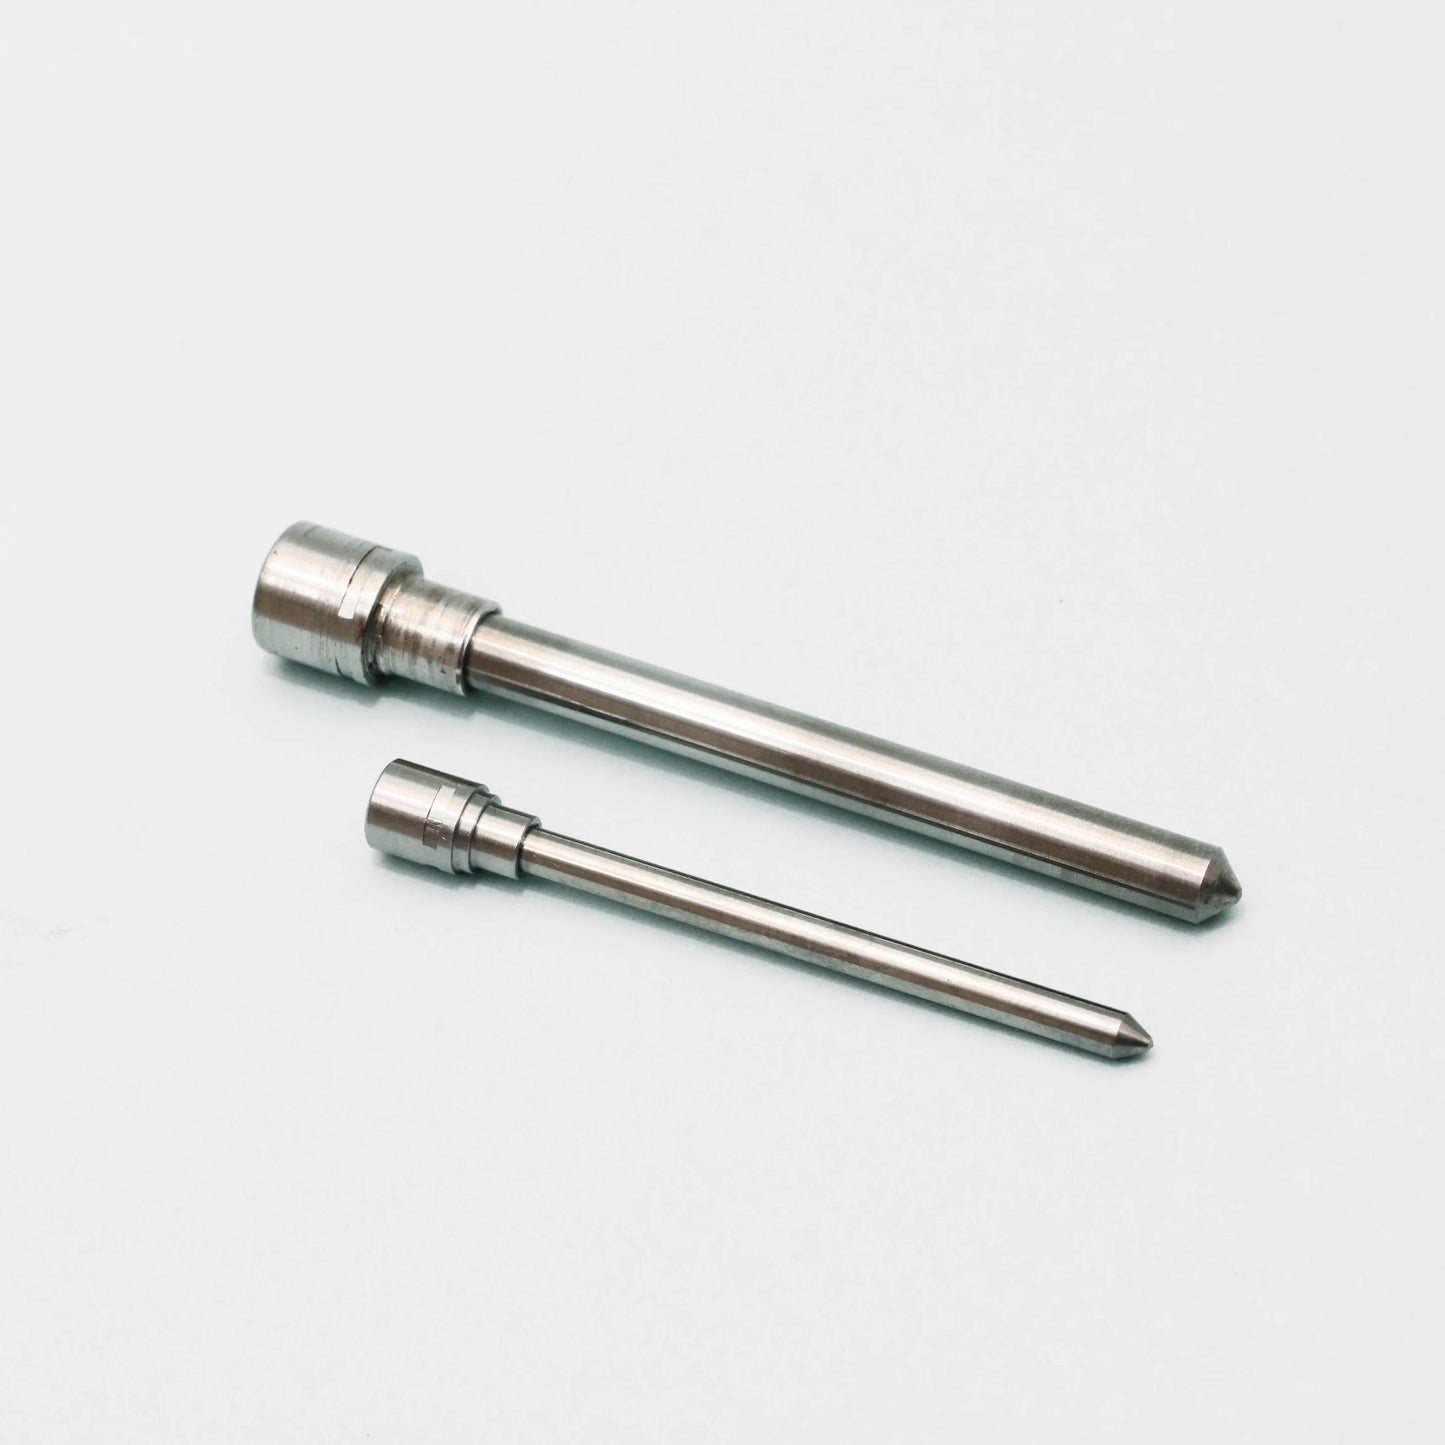 BSD Carbide Pin - 90° Tip angle, Standard Length